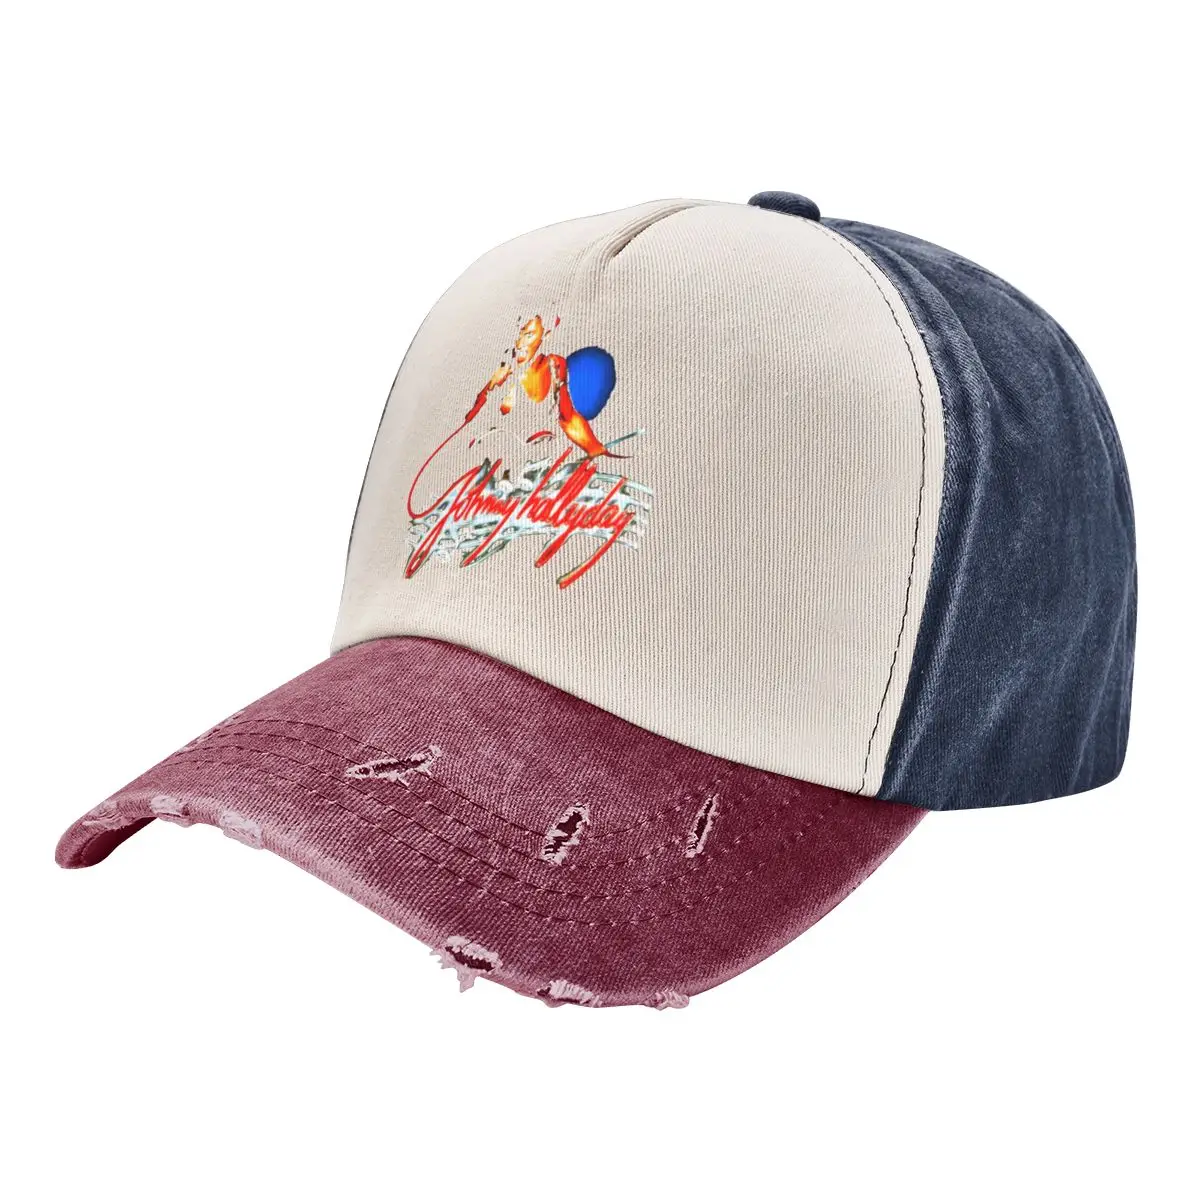 

Vintage Johnny Hallyday Baseball Caps Unisex Distressed Washed Snapback Cap Rock Music Outdoor All Seasons Travel Hats Cap